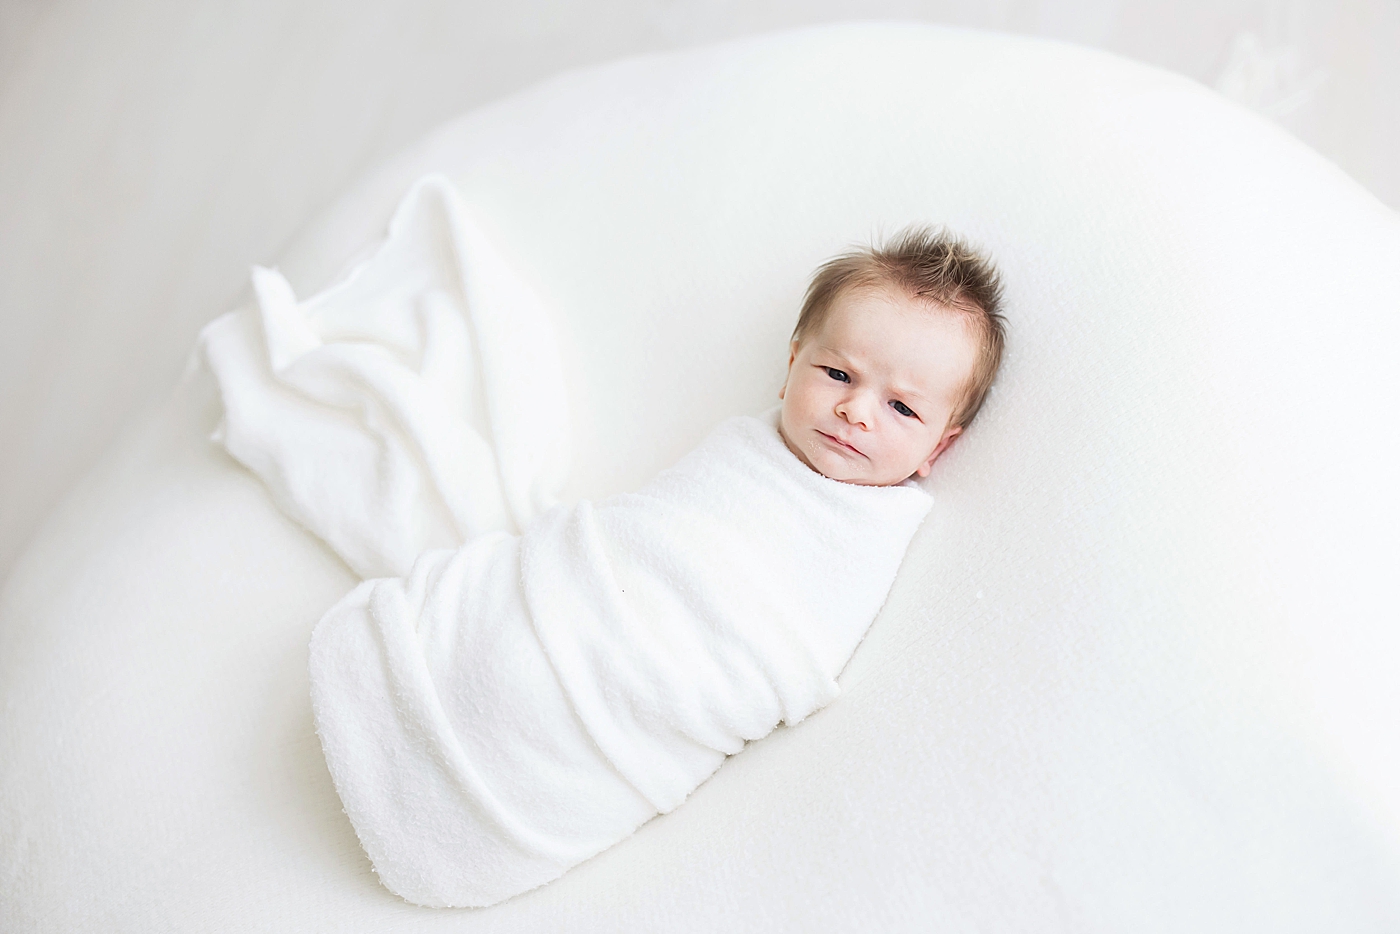 Newborn baby boy wide awake and swaddled. Photo by Fresh Light Photography.